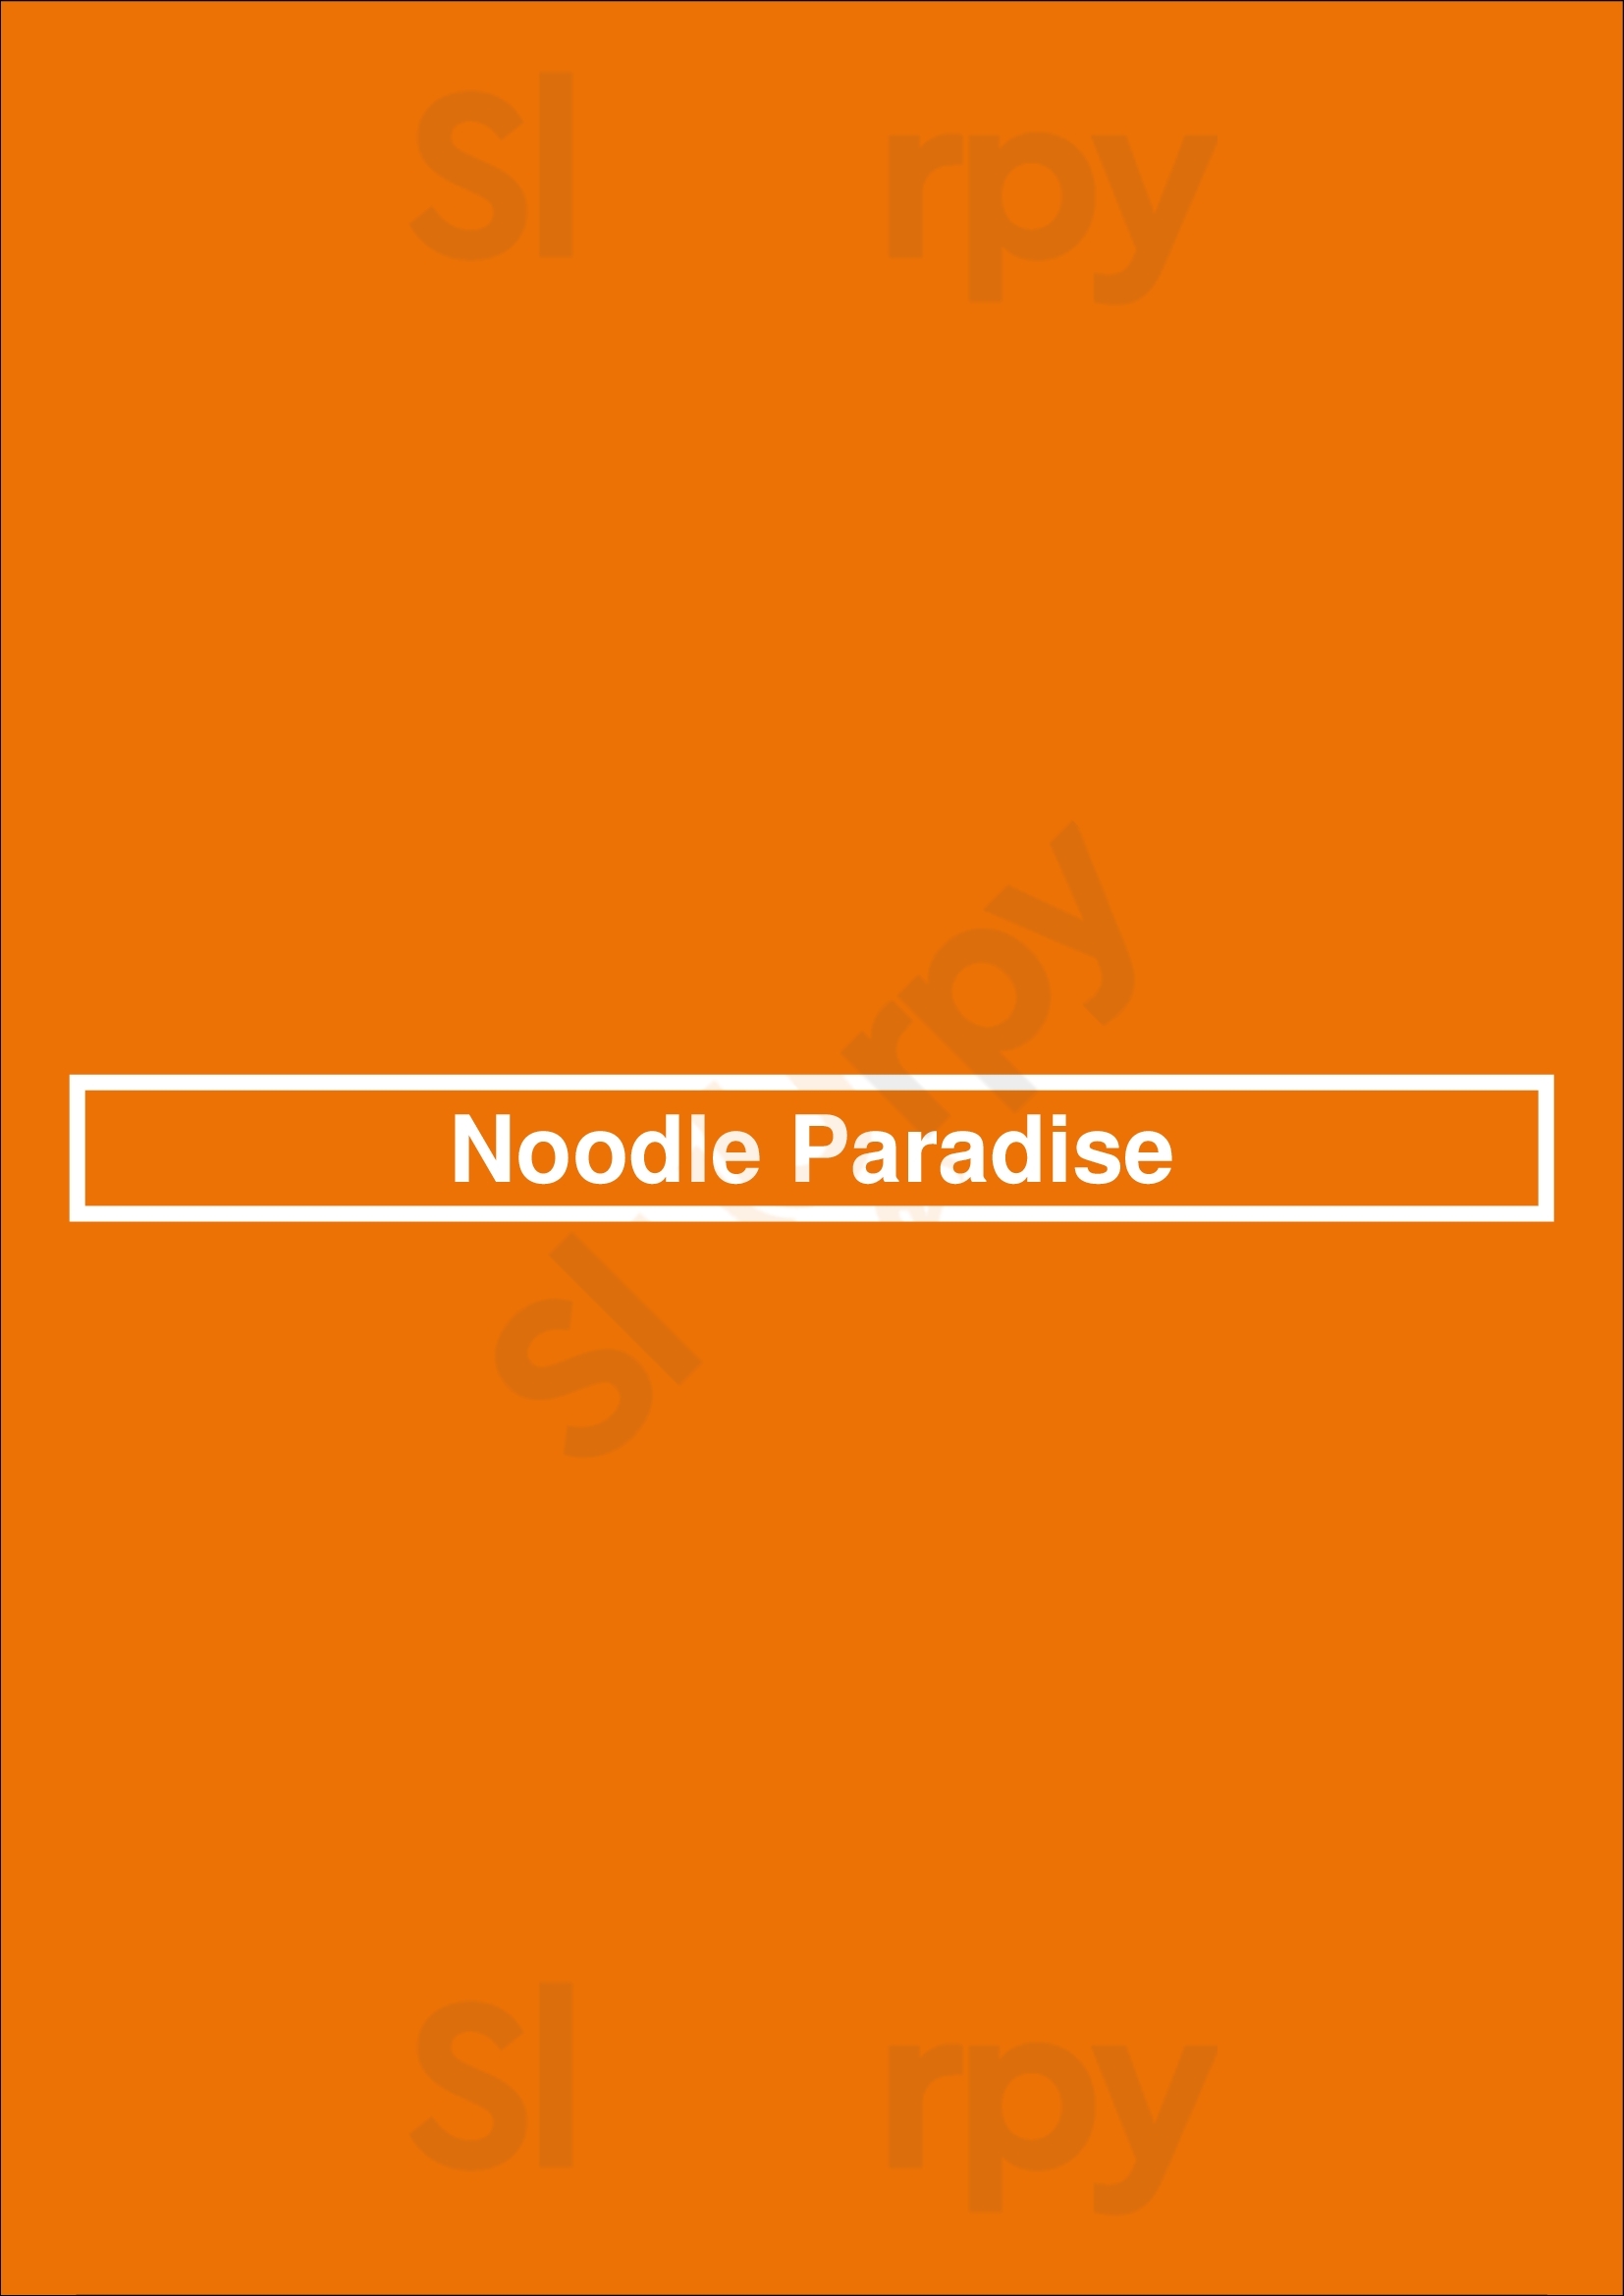 Noodle Paradise Burnaby Menu - 1